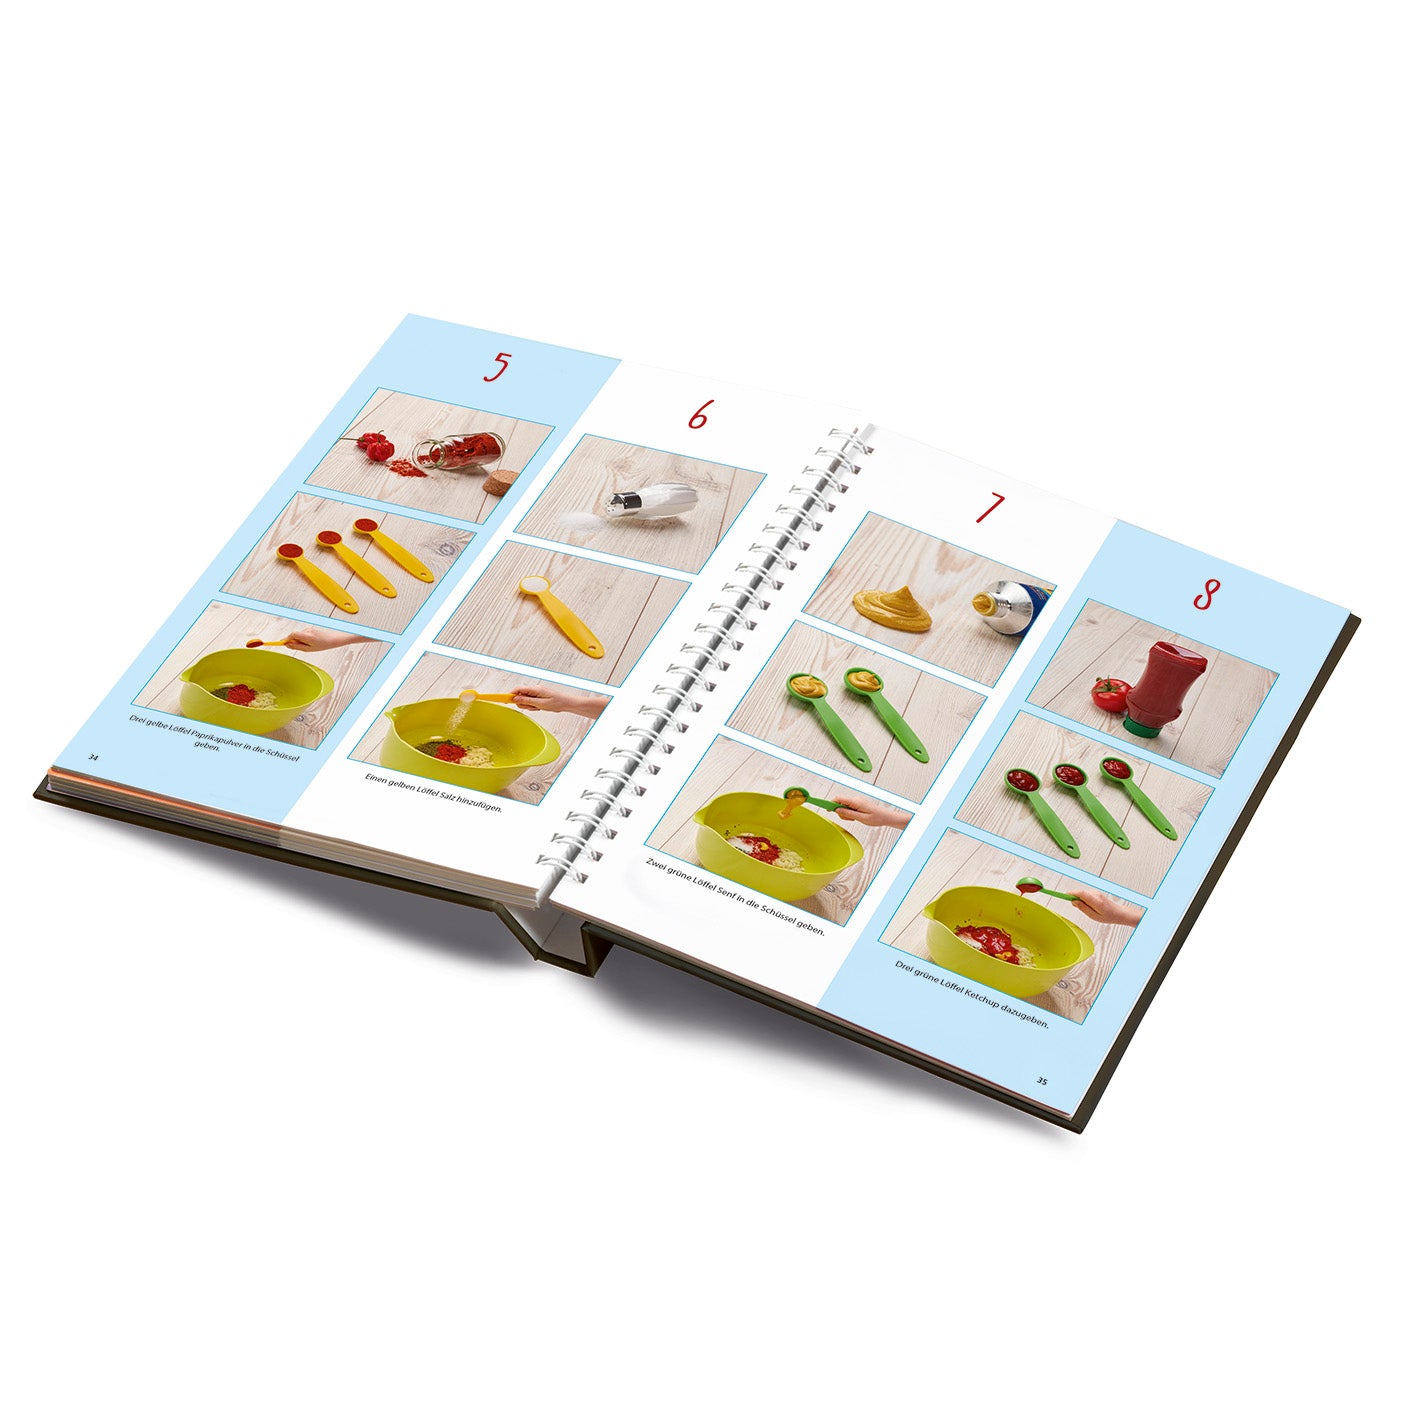 Rezeptbuch inkl. Messbecher-Set - Band 5 - Ofen-Rezepte für die ganze Familie (DIN-A5)